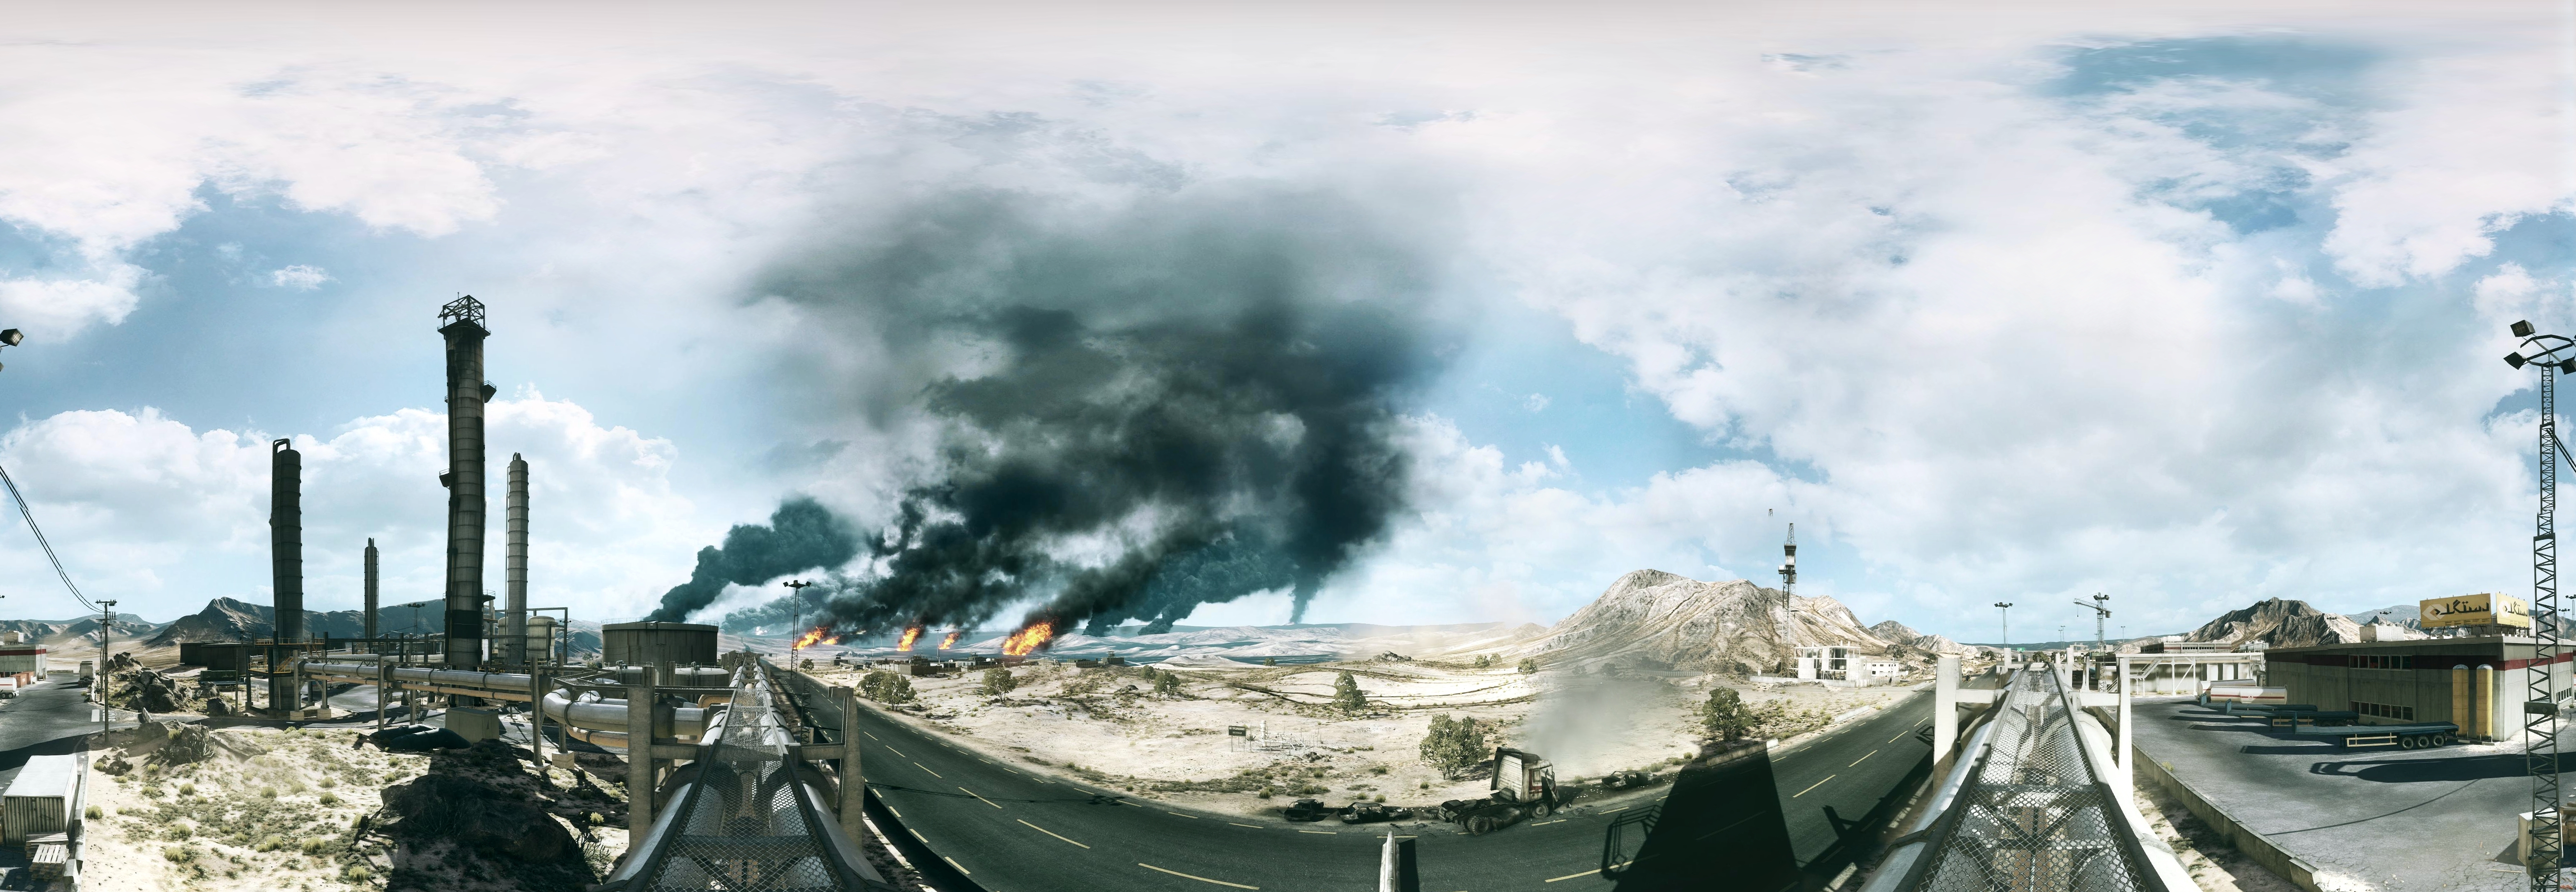 Battlefield_3_Panorama_Operation_Firestorm.jpg